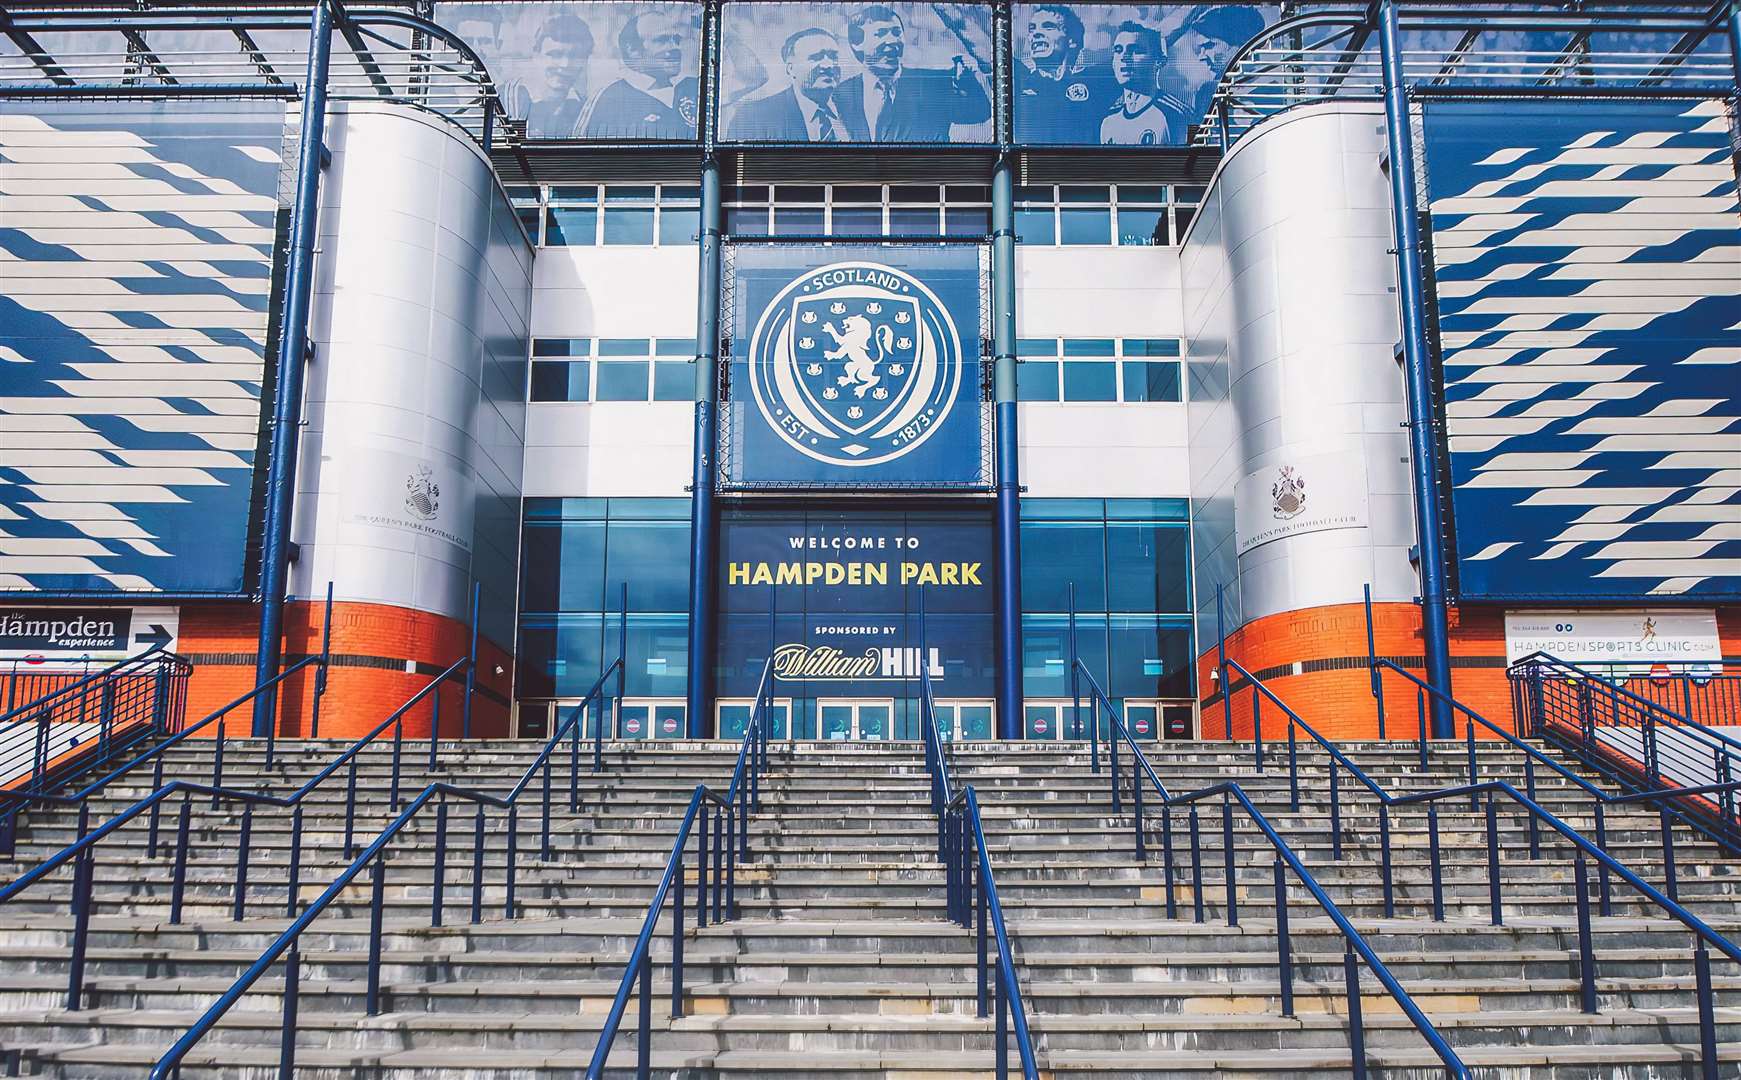 Glasgow, Scotland - May 2019: Hampden Park football stadium